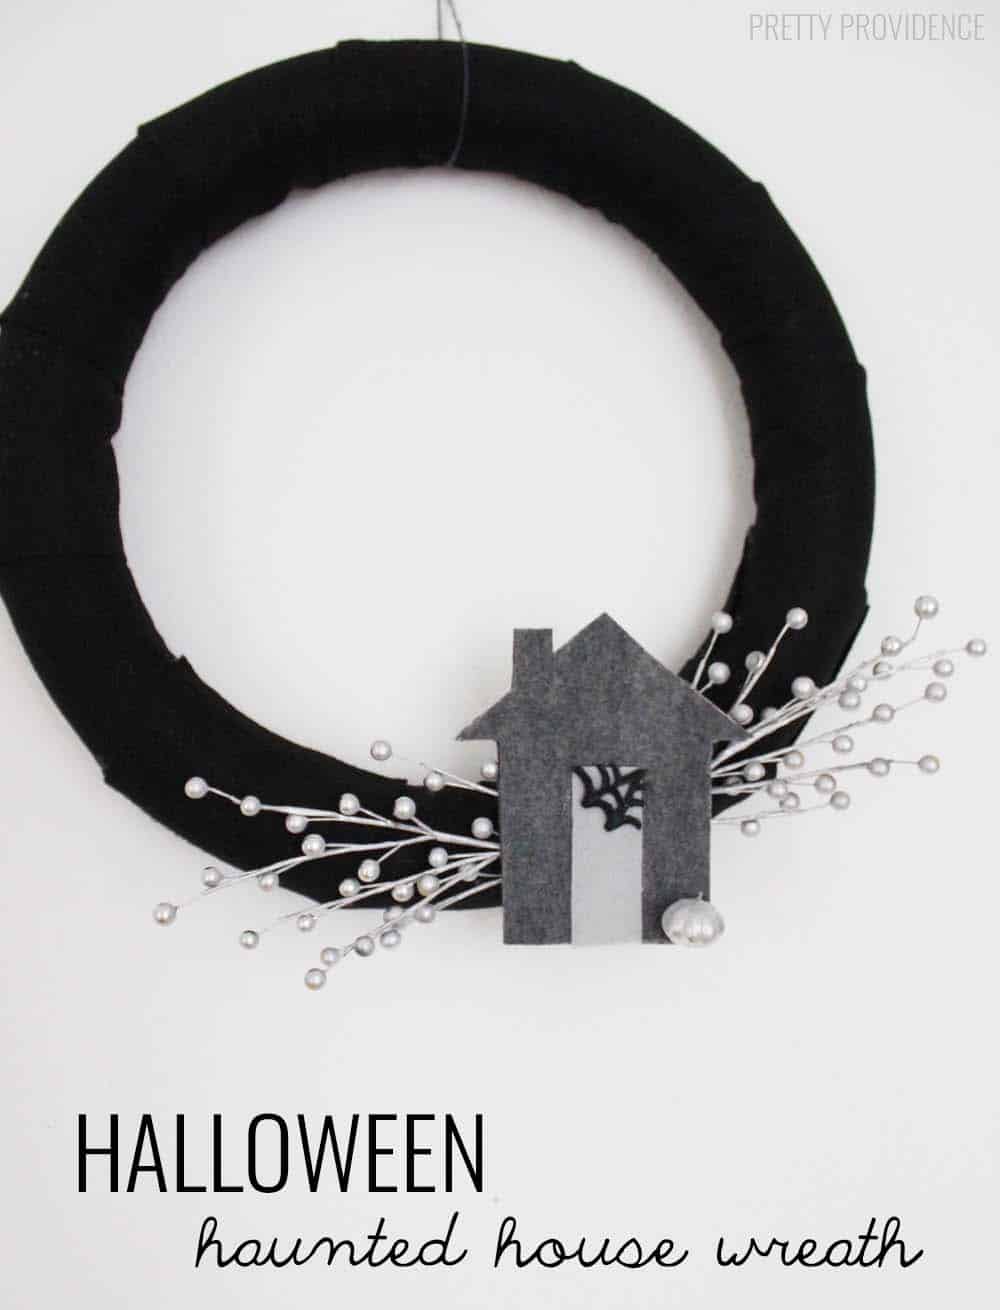 I love this cute, modern haunted house wreath for Halloween!